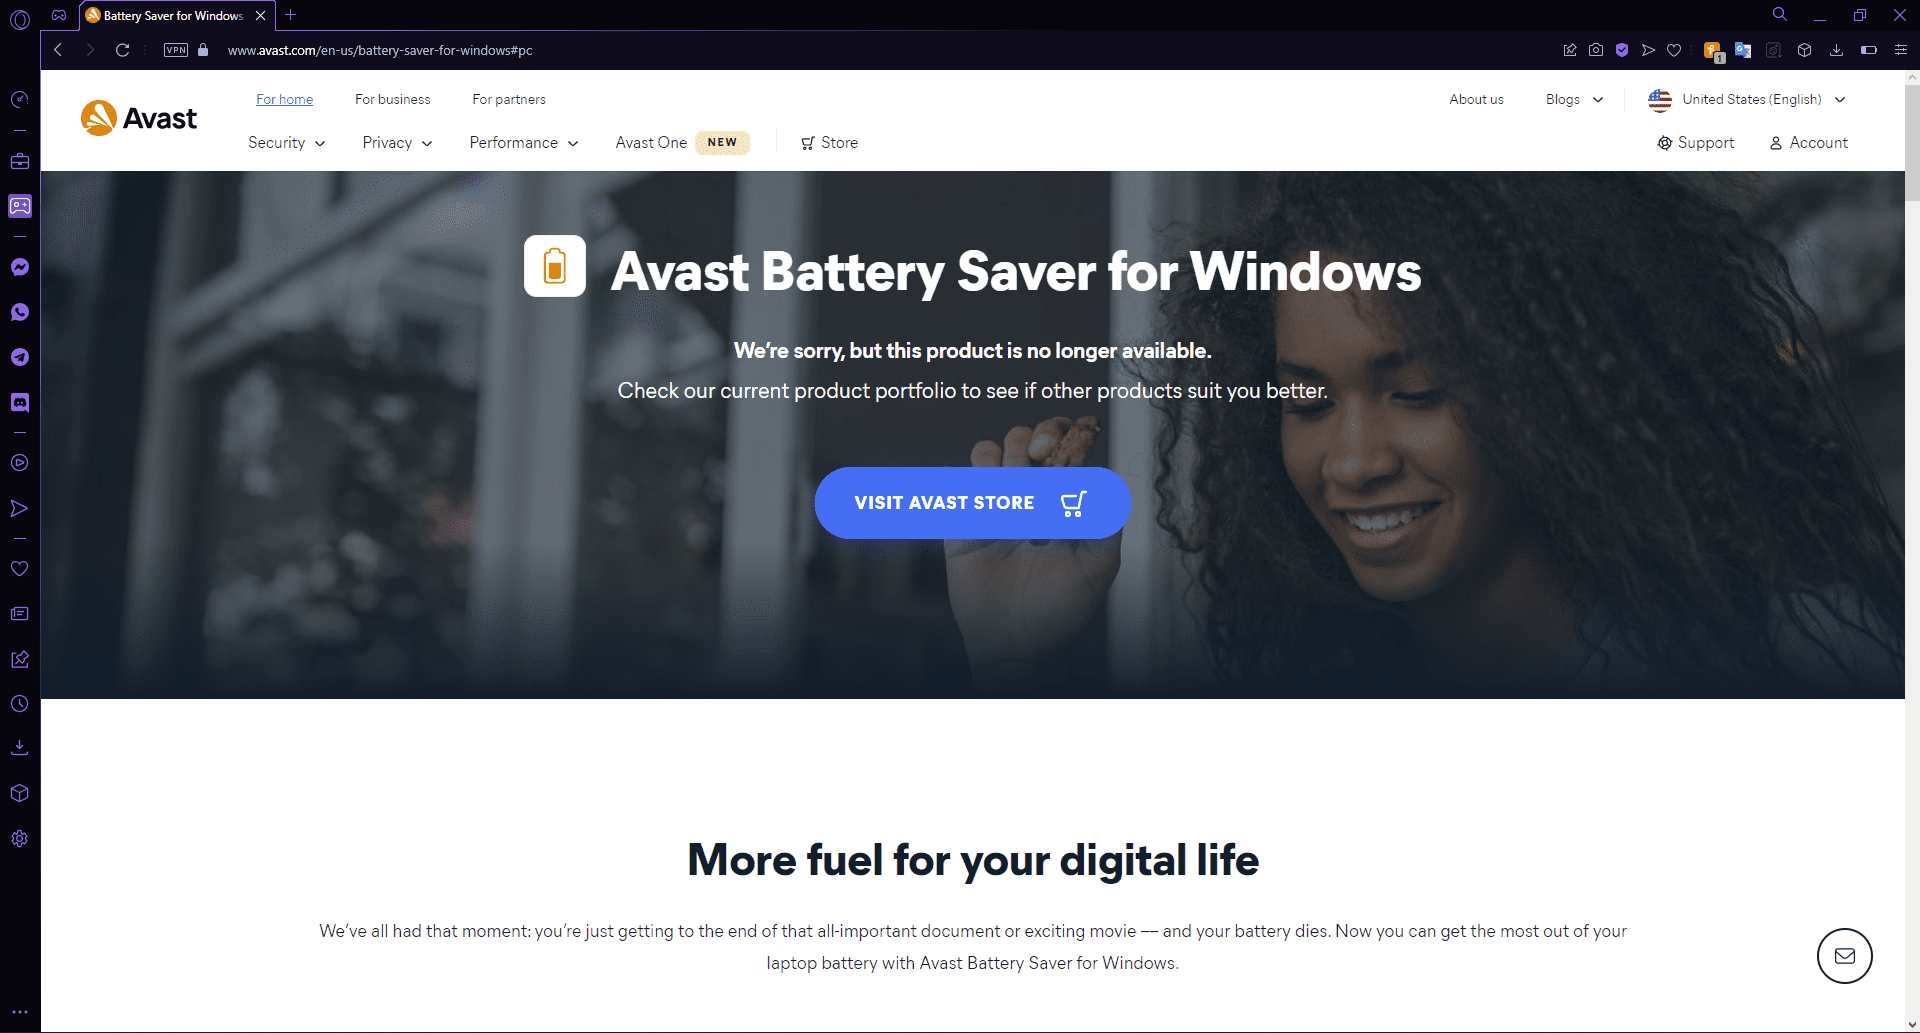 Avast battery saver for Windows.